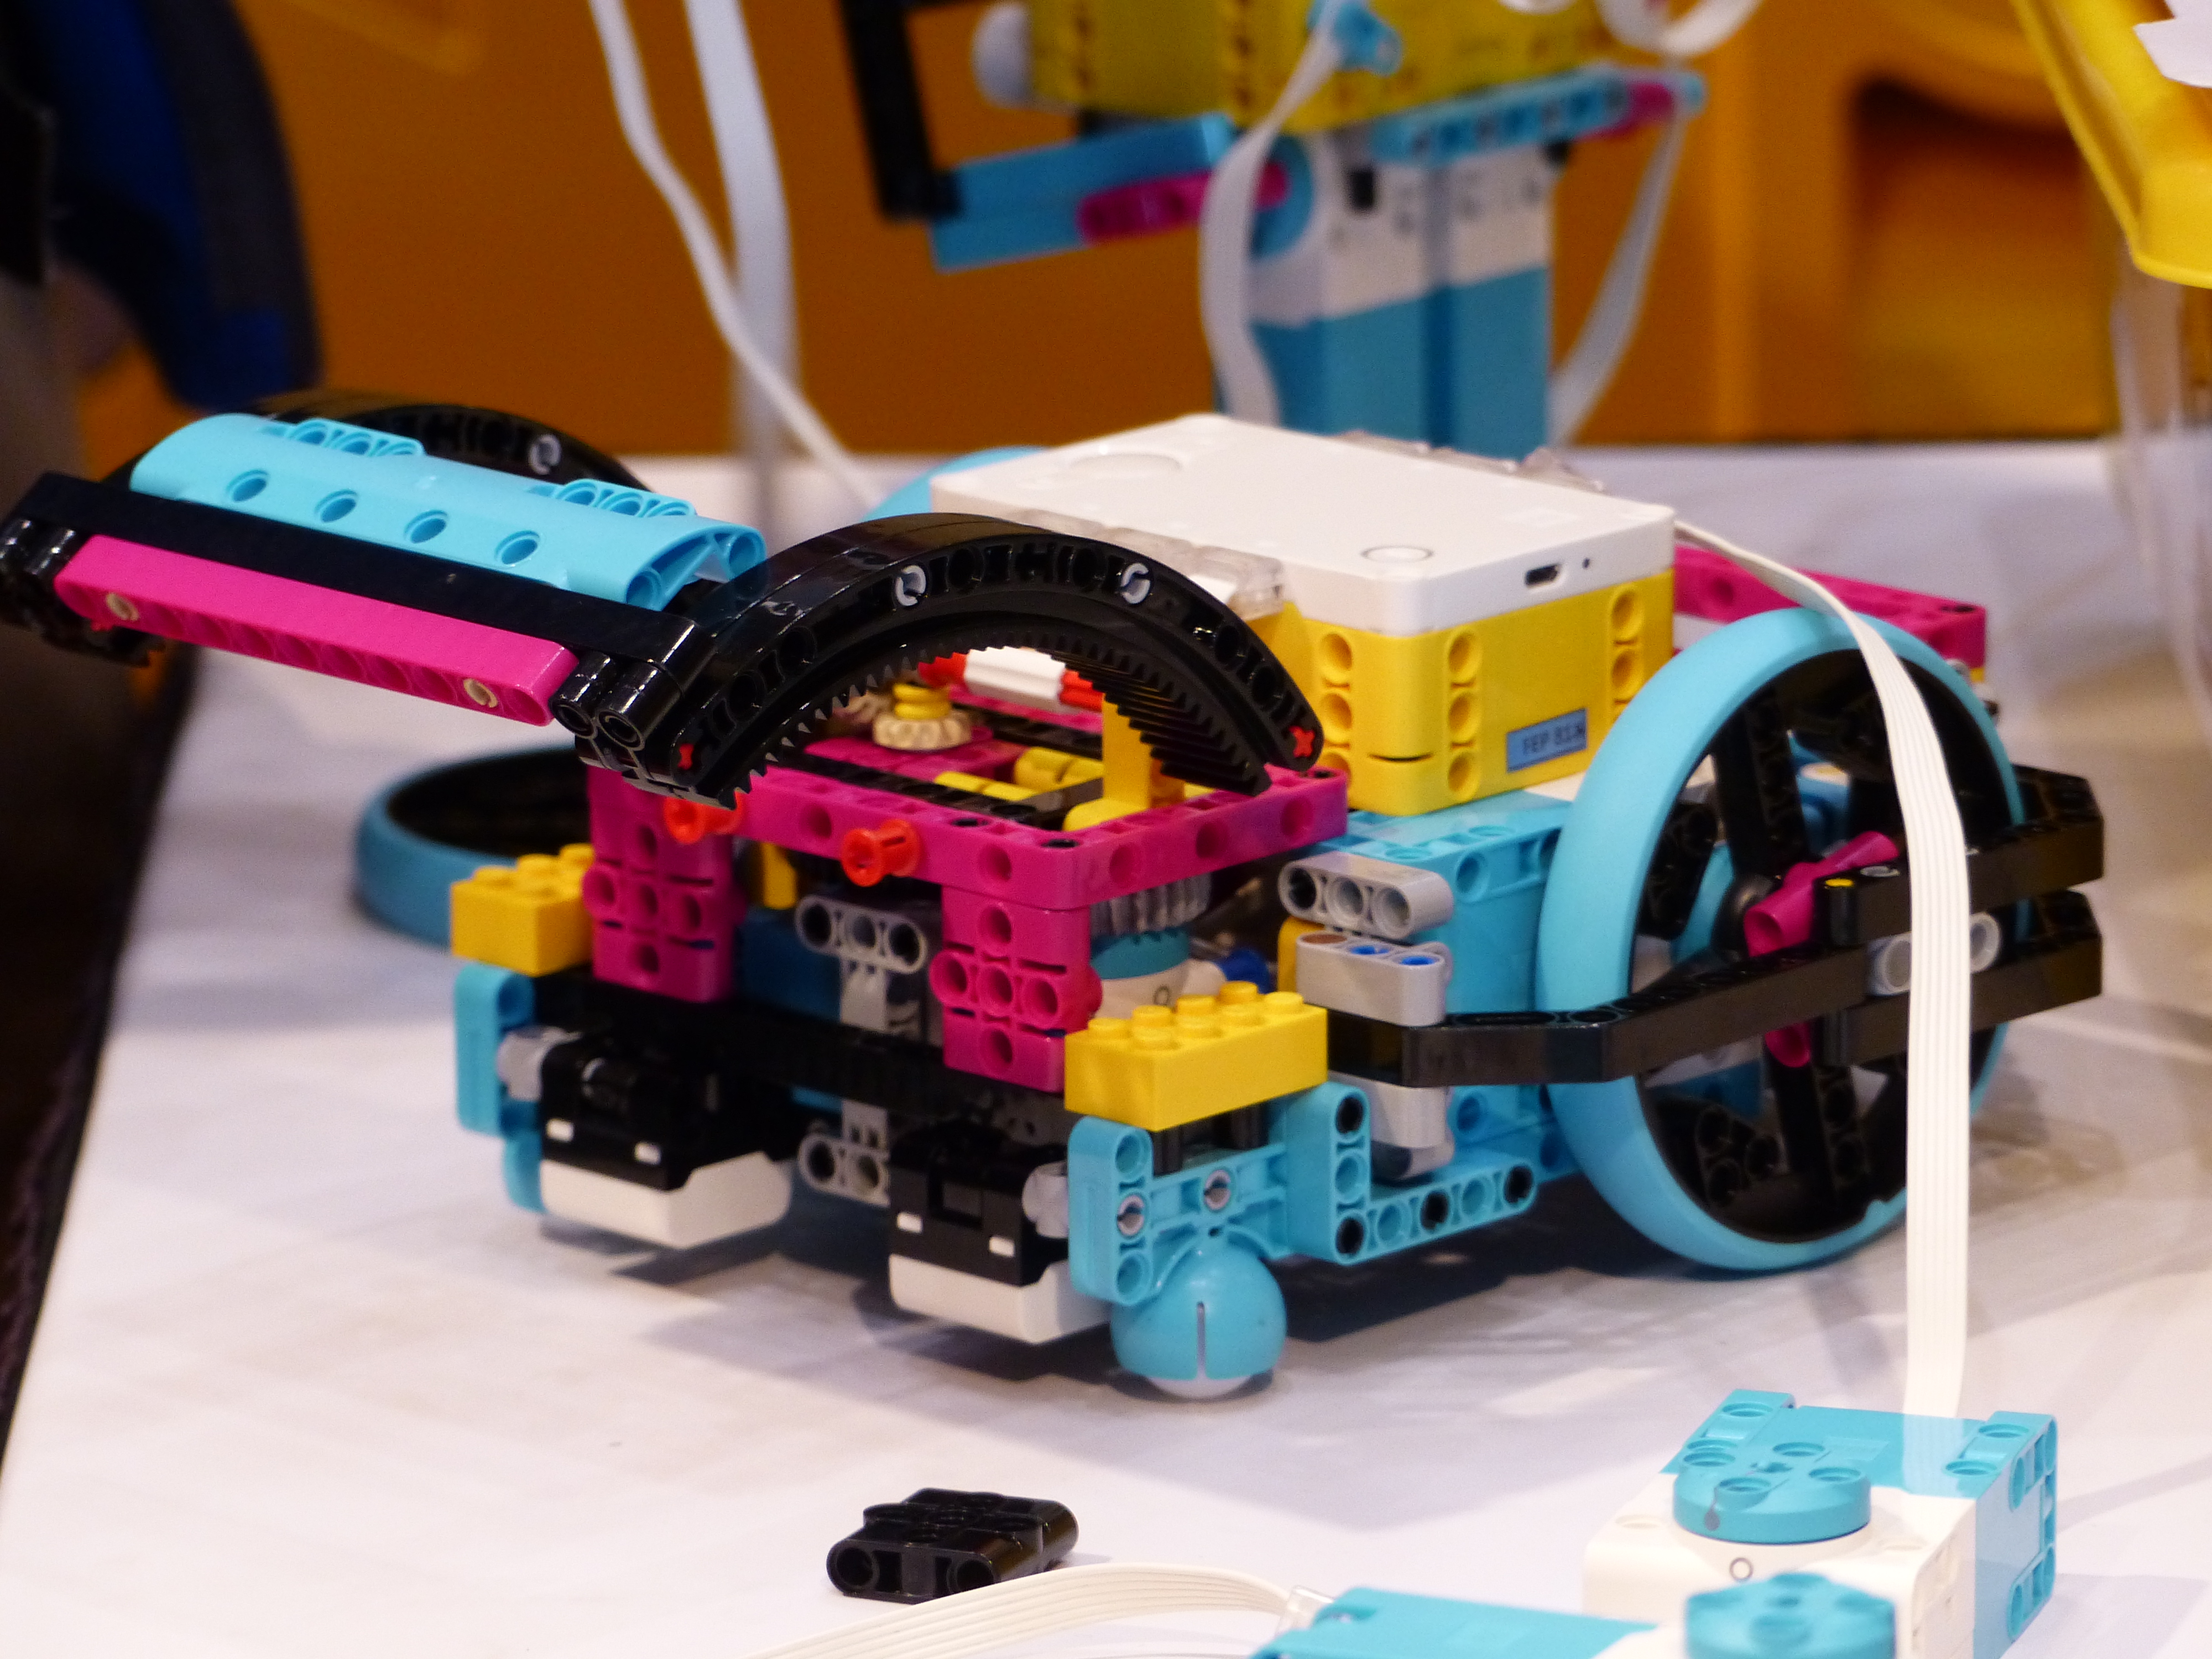 Lego_Spike_Robot_1.jpg